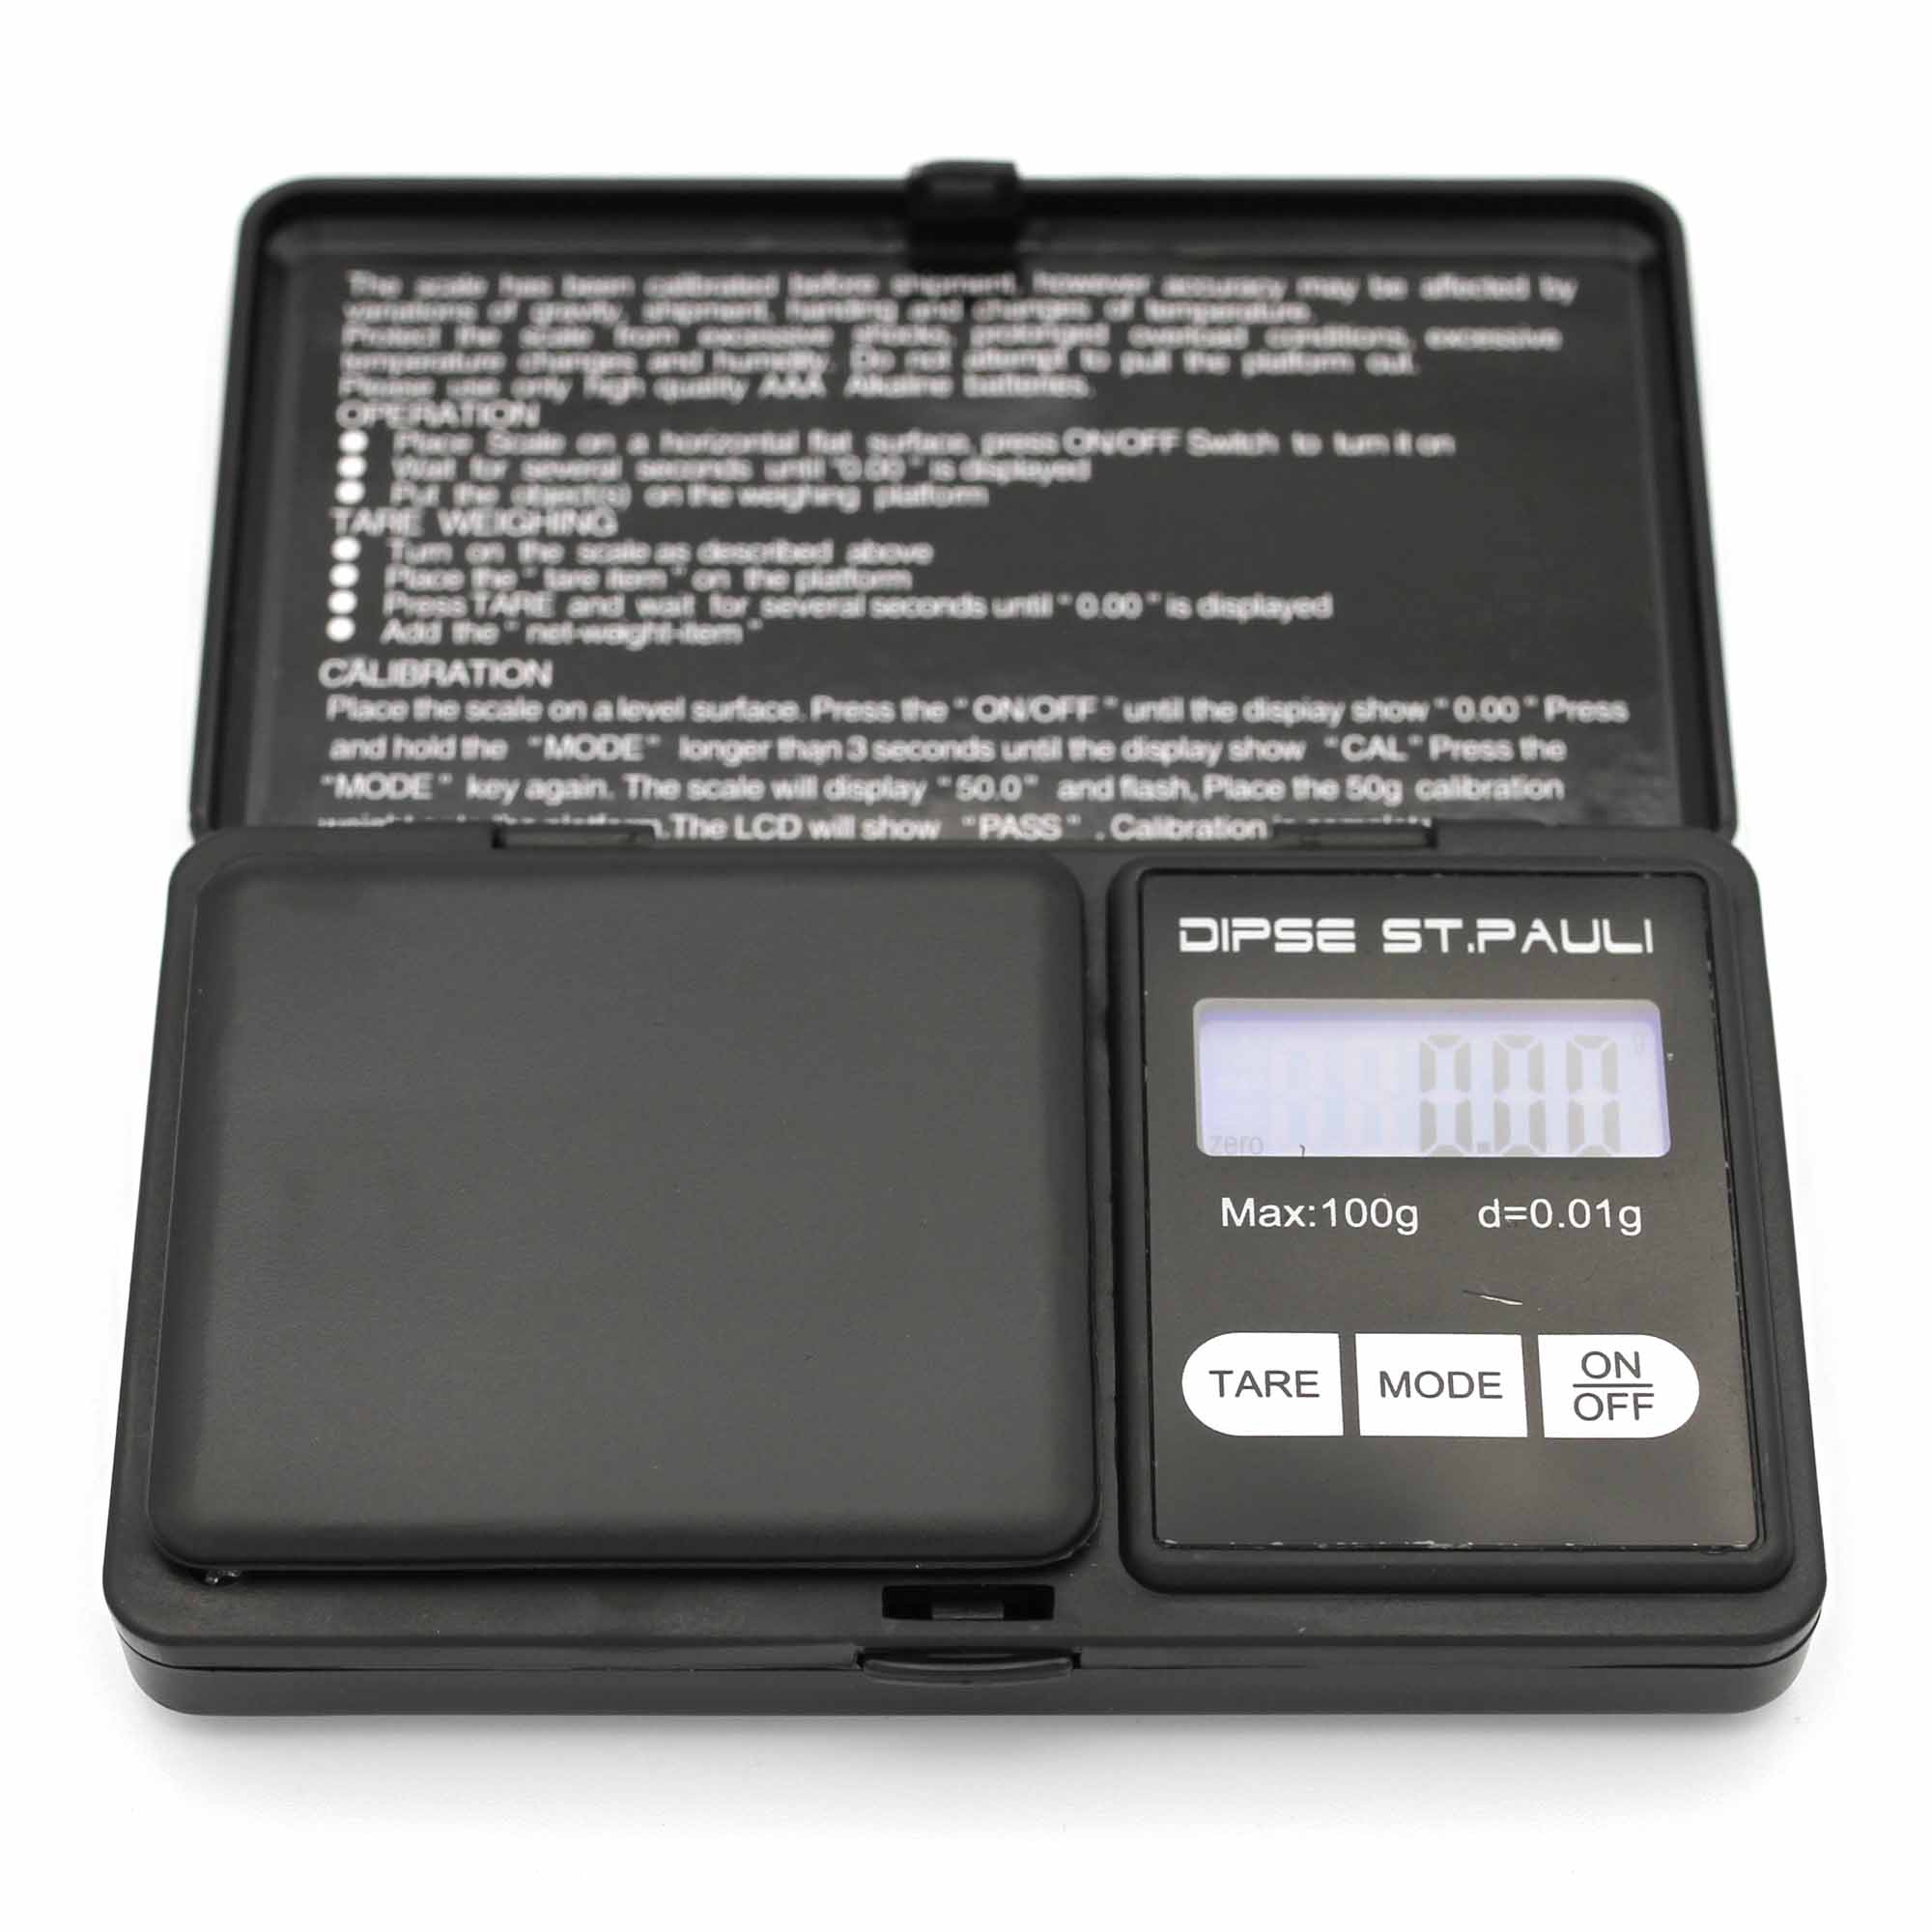 Dipse 420 Digitale Taschenwaage Digitalwaage 100g x 0,01g 